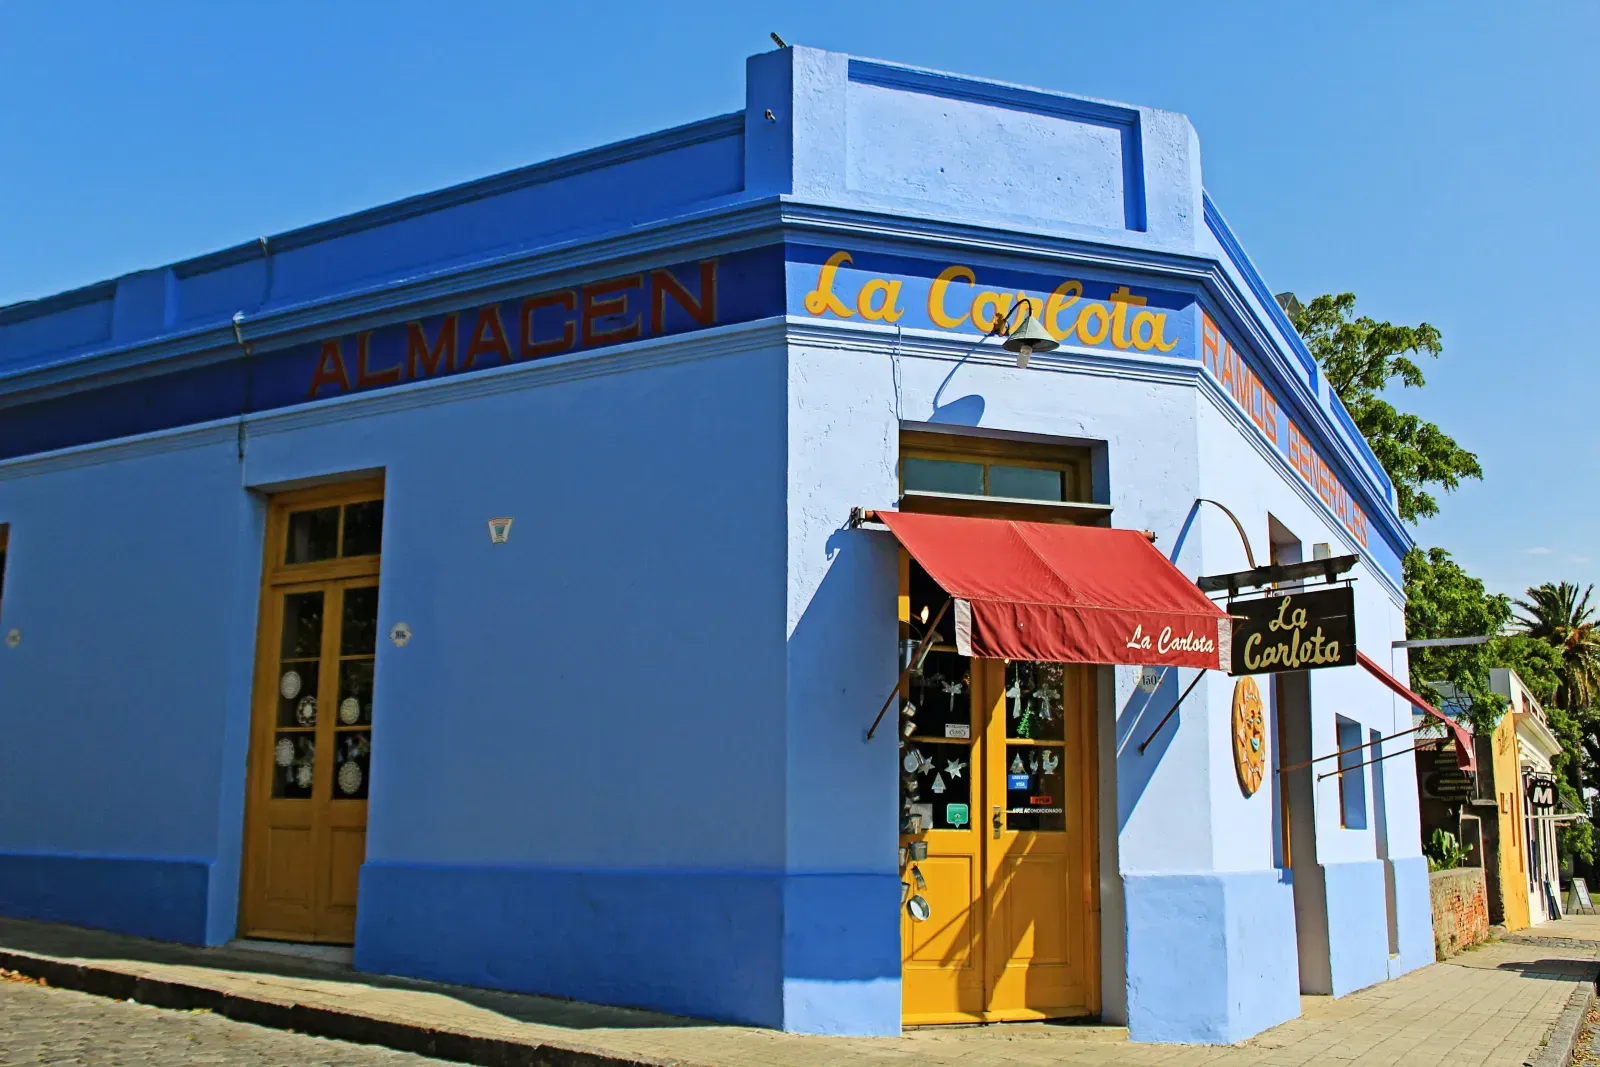 Blue building in Uruguay